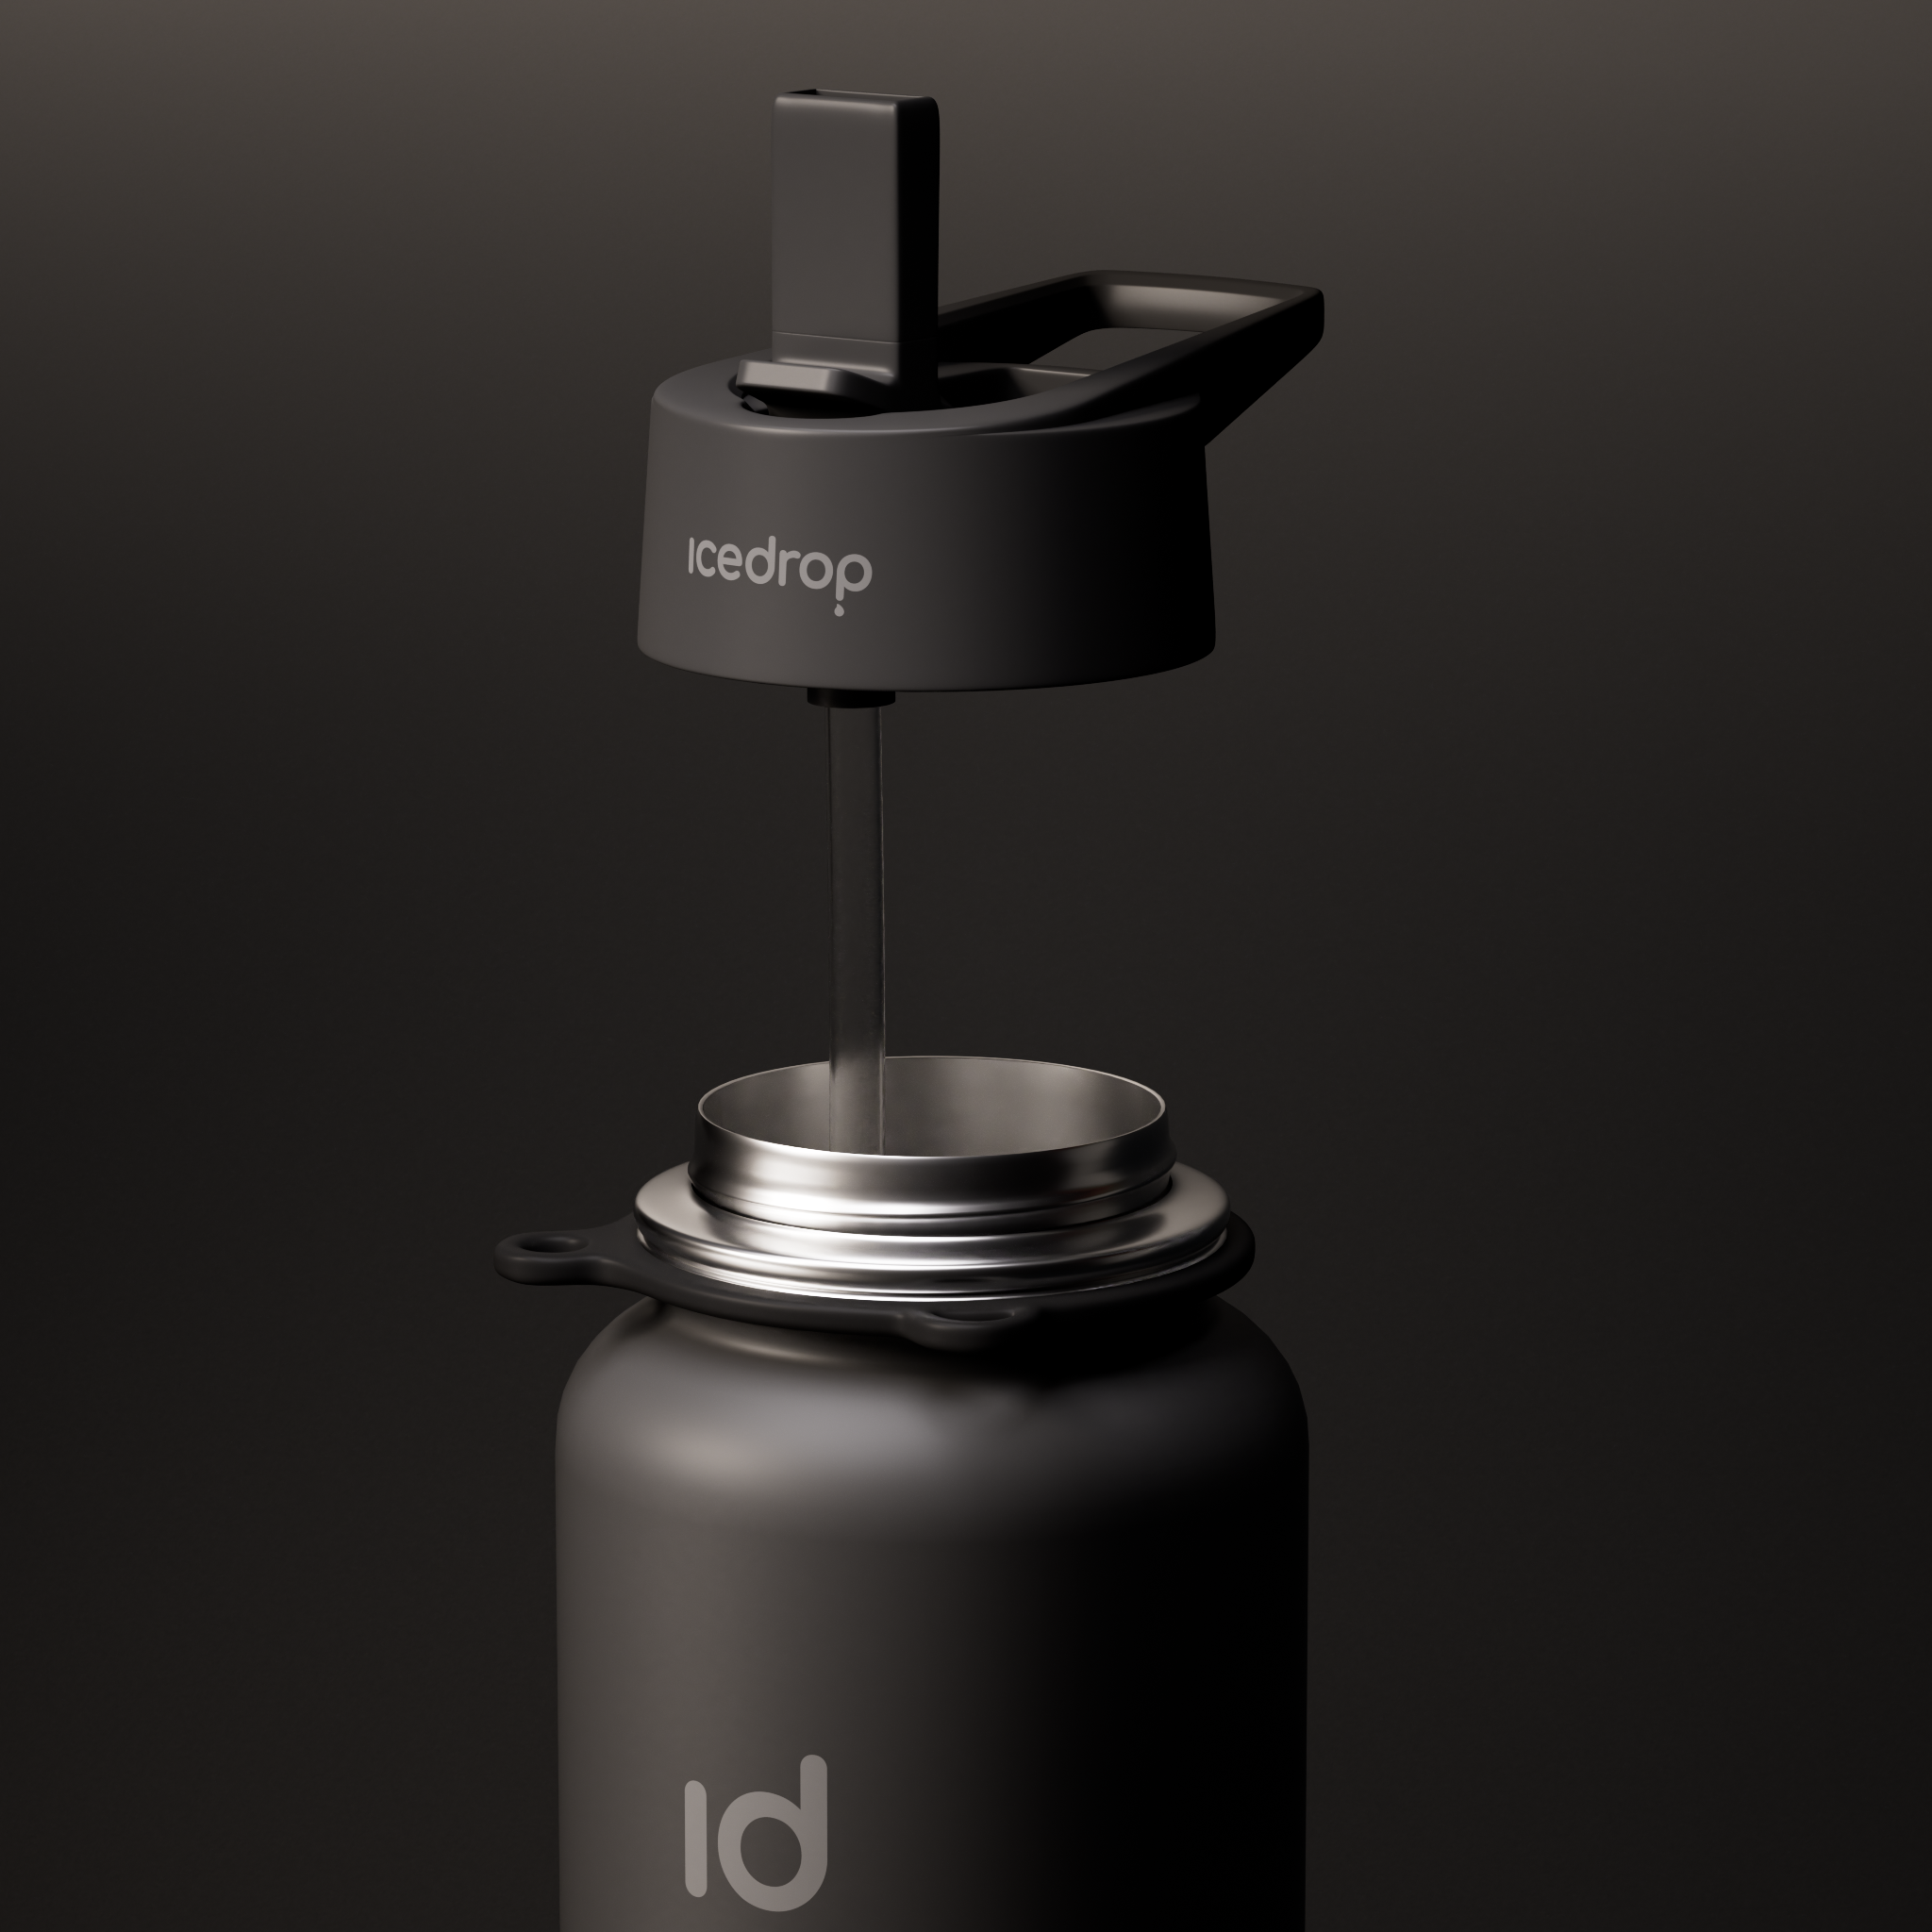 Hydrohike™ Grau / Neon | Thermo Outdoor Trinkflasche | 1200ml | BPA frei